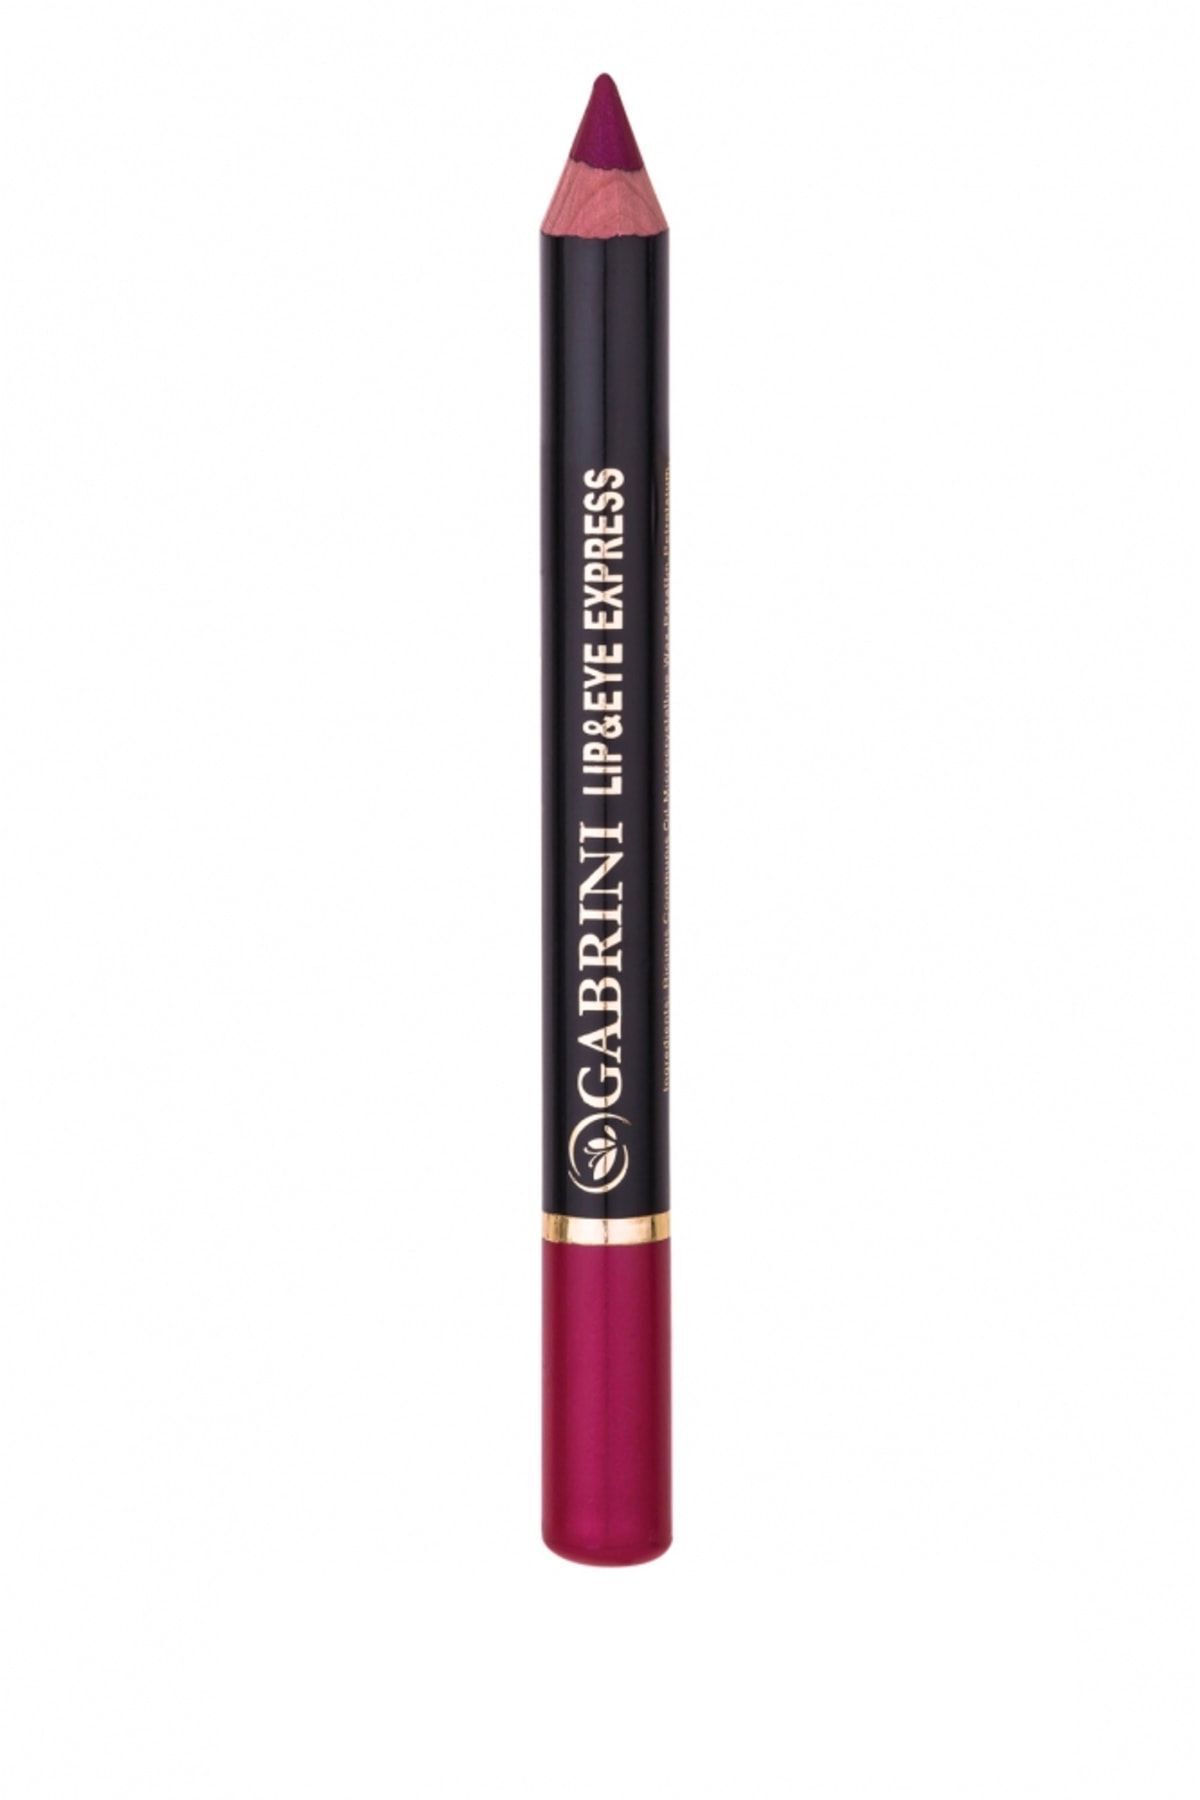 Gabrini Express Lip& Eye Pencil - 133